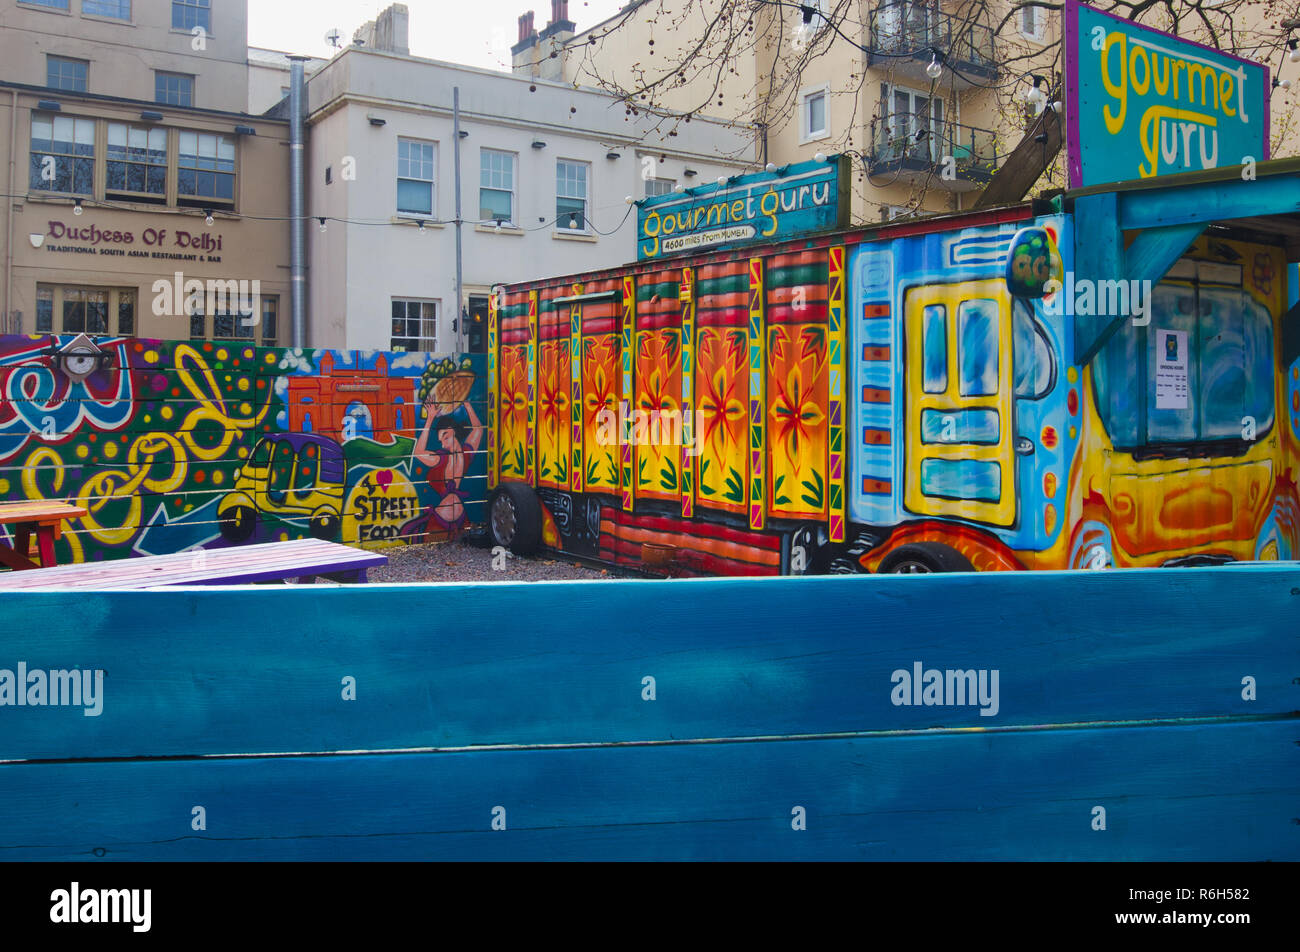 Gourmet Guru Indian street food colourful truck, Cardiff Bay, Cardiff, Wales, Stock Photo